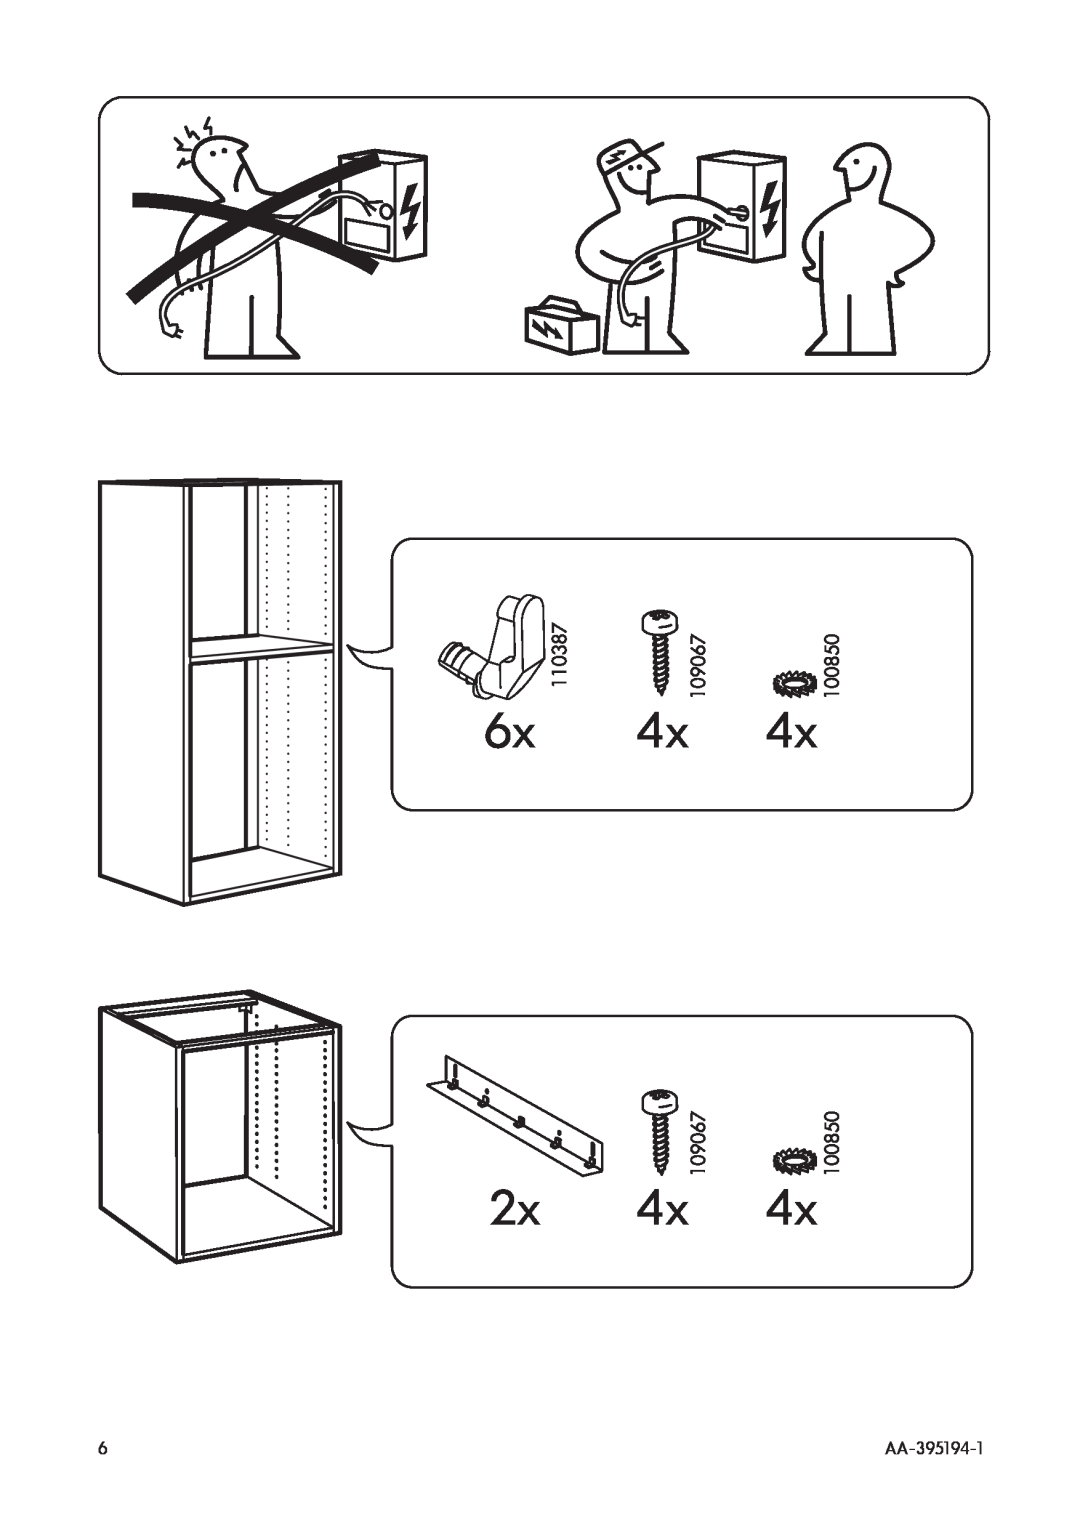 IKEA OV3 manual 6x 4x 2x, AA-395194-1 